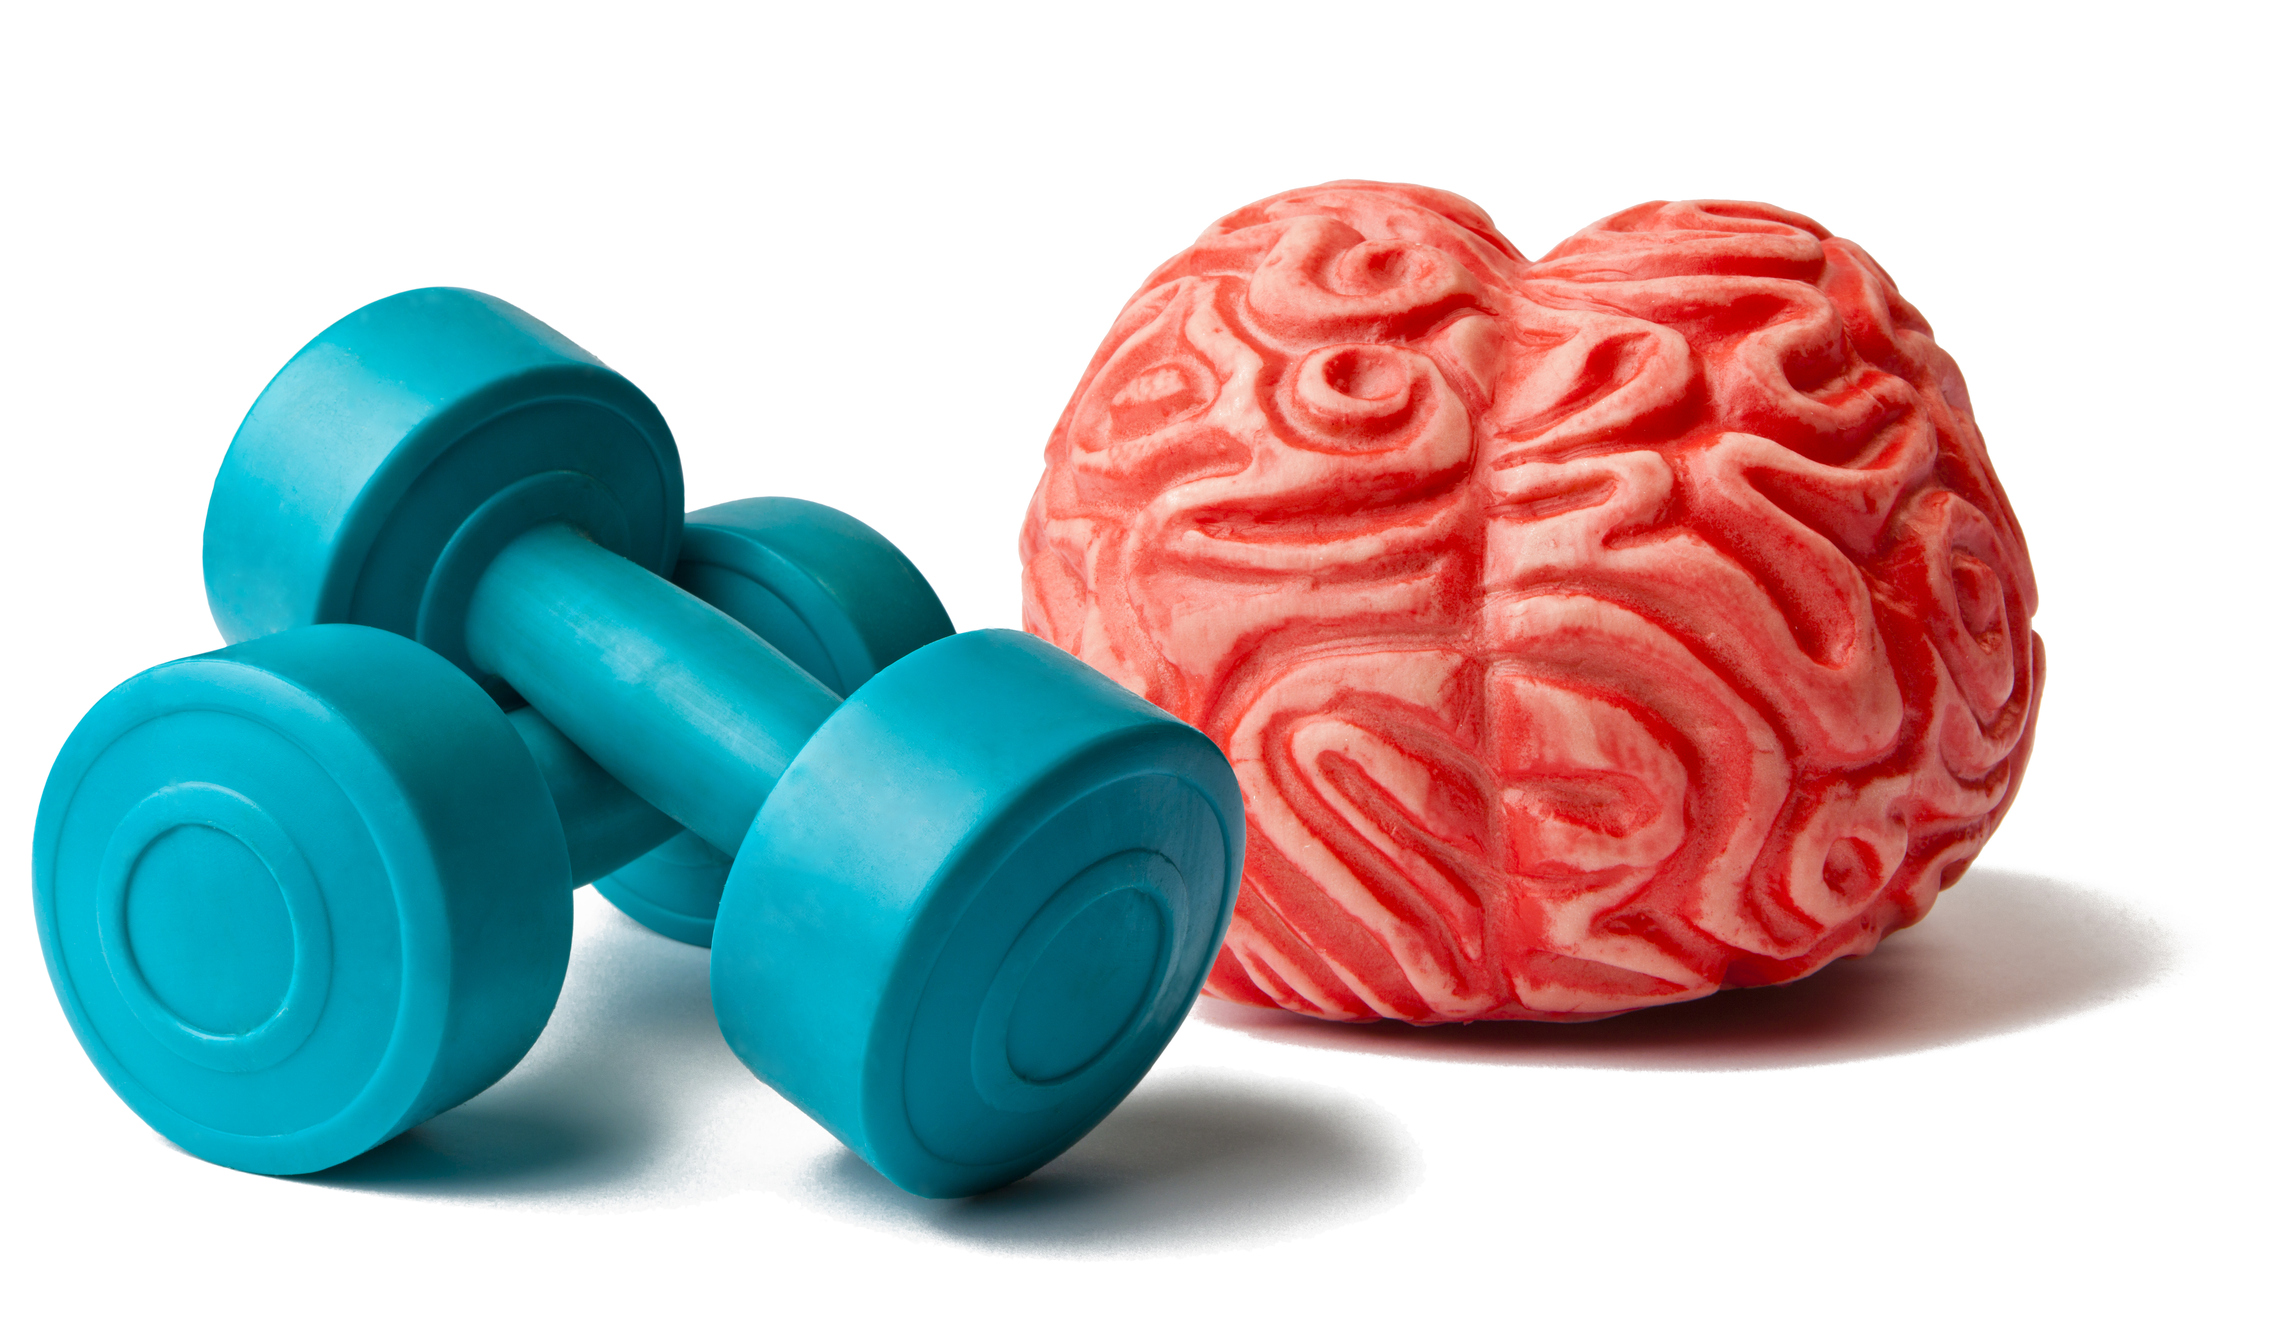 myth-brain-training-will-make-you-smarter-association-for